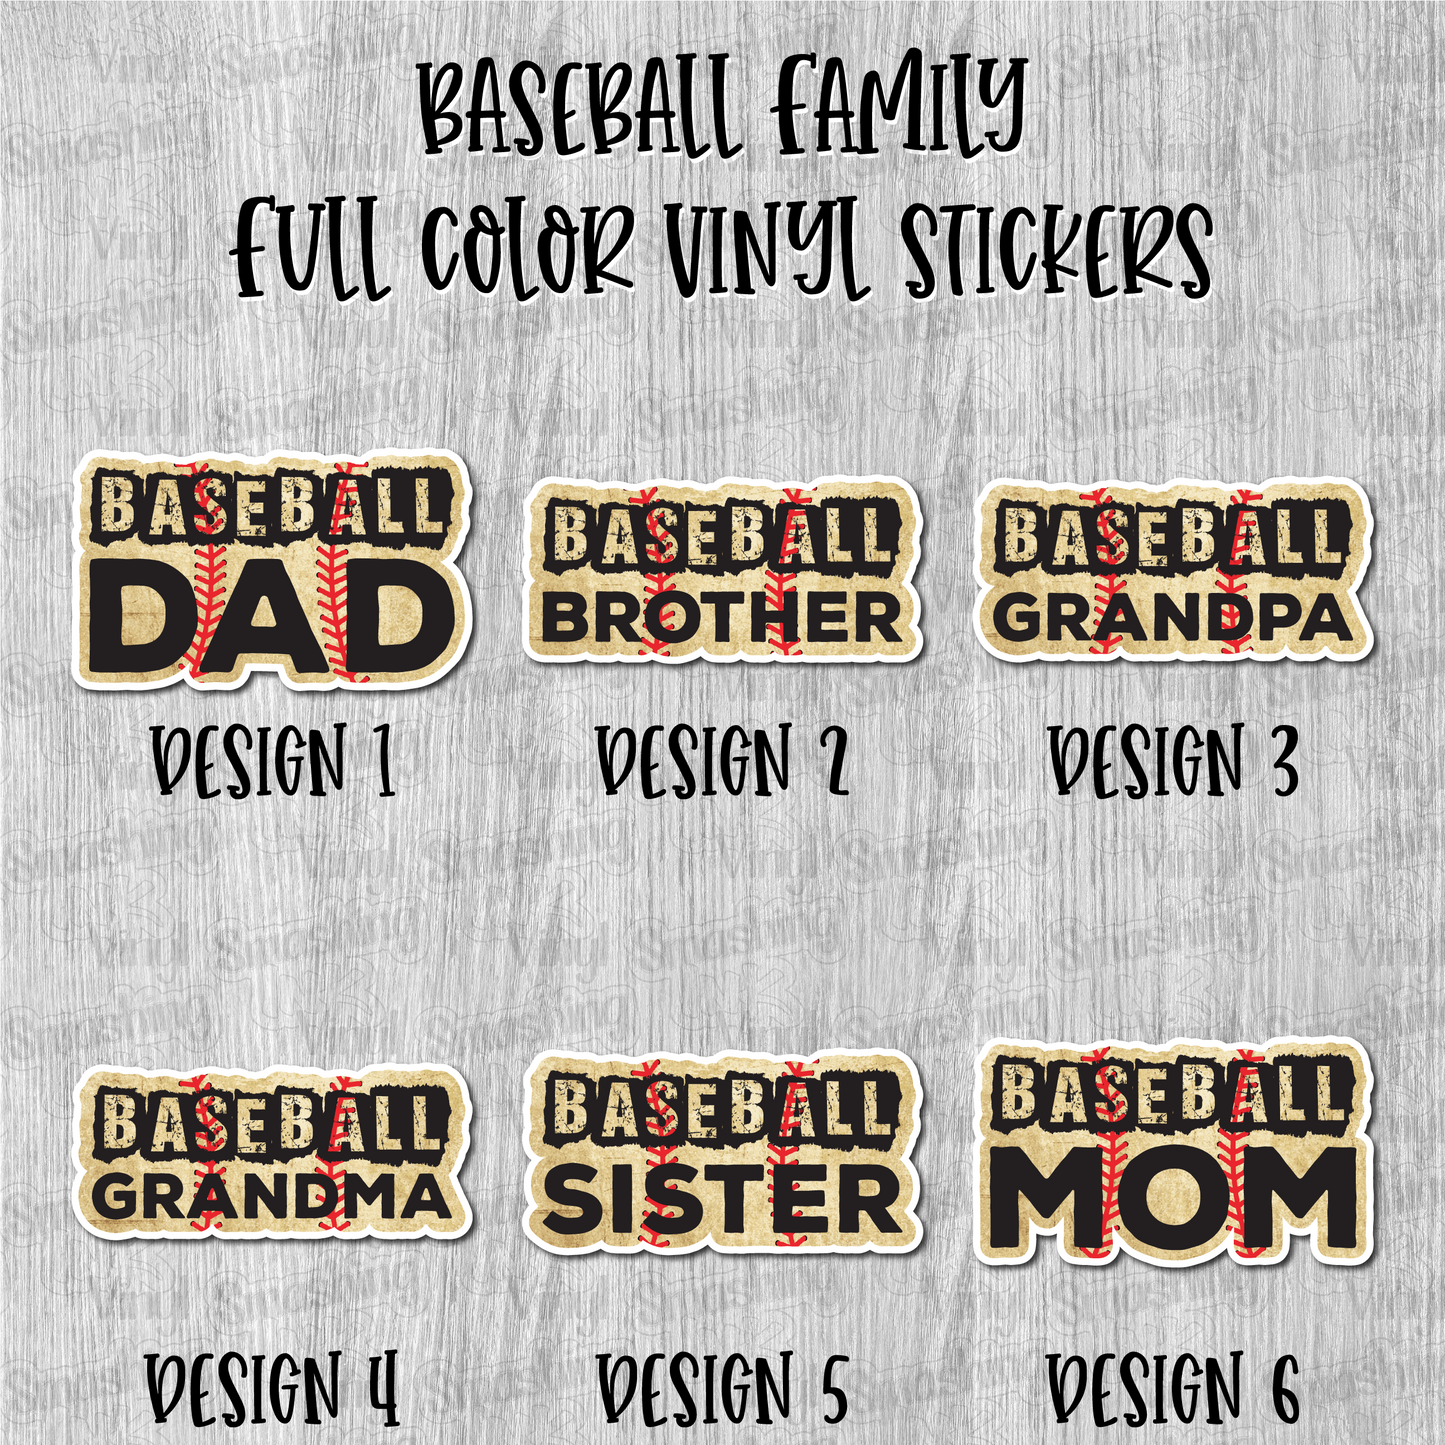 Baseball Family - Full Color Vinyl Stickers (SHIPS IN 3-7 BUS DAYS)